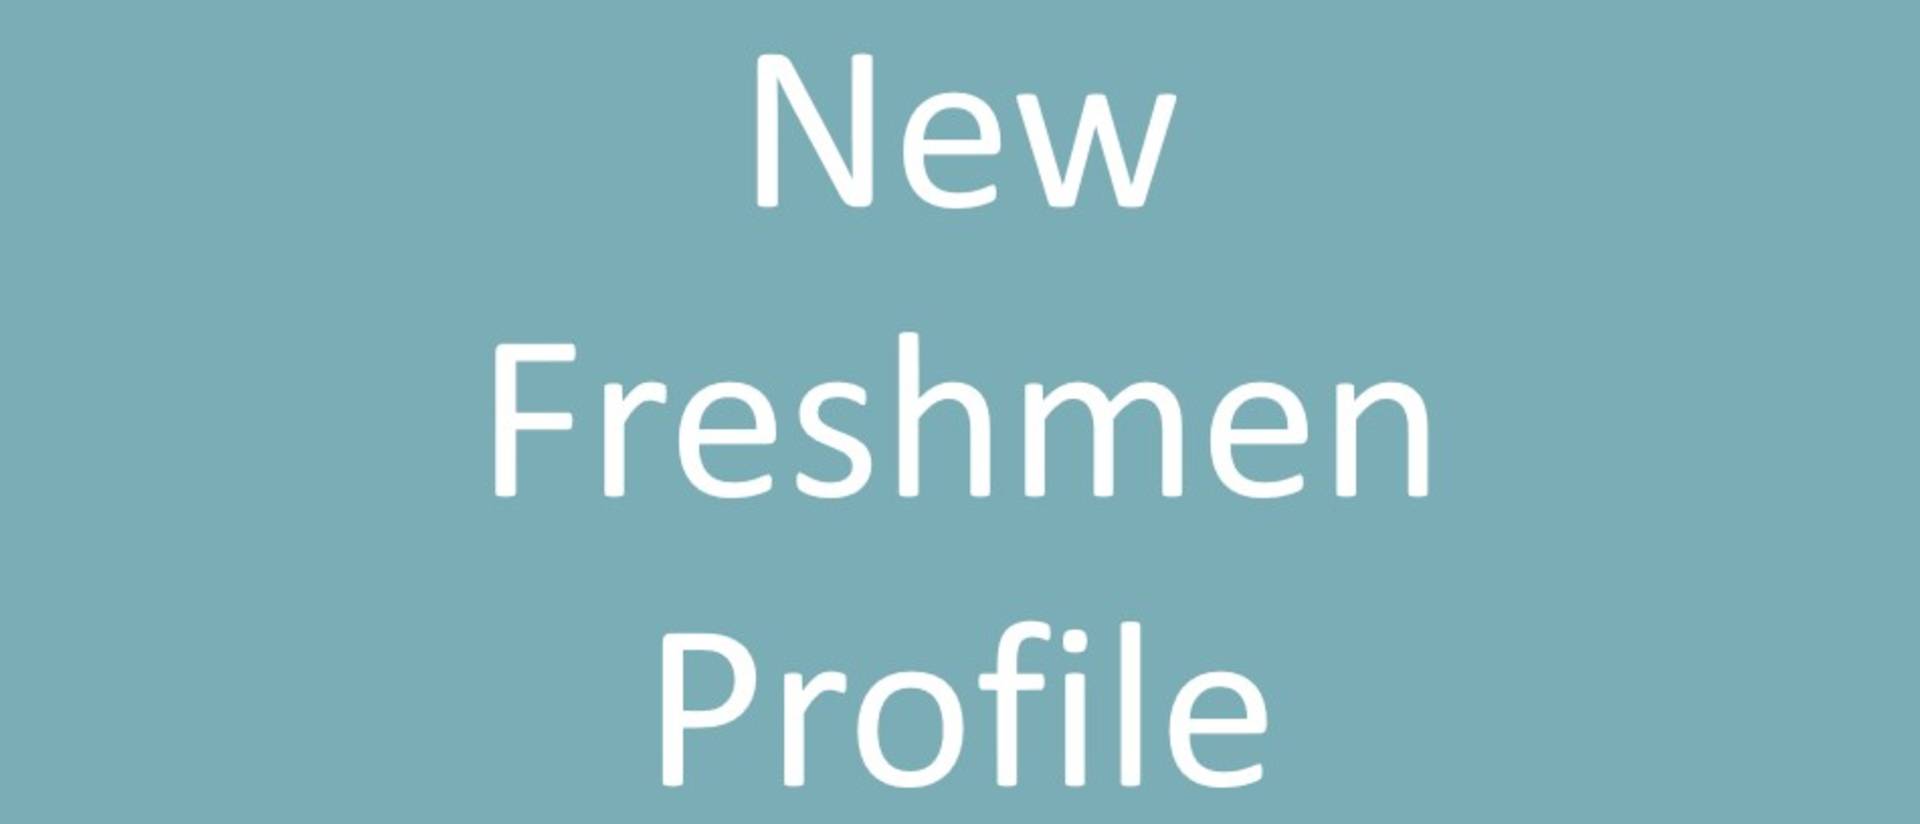 New Freshmen Profile